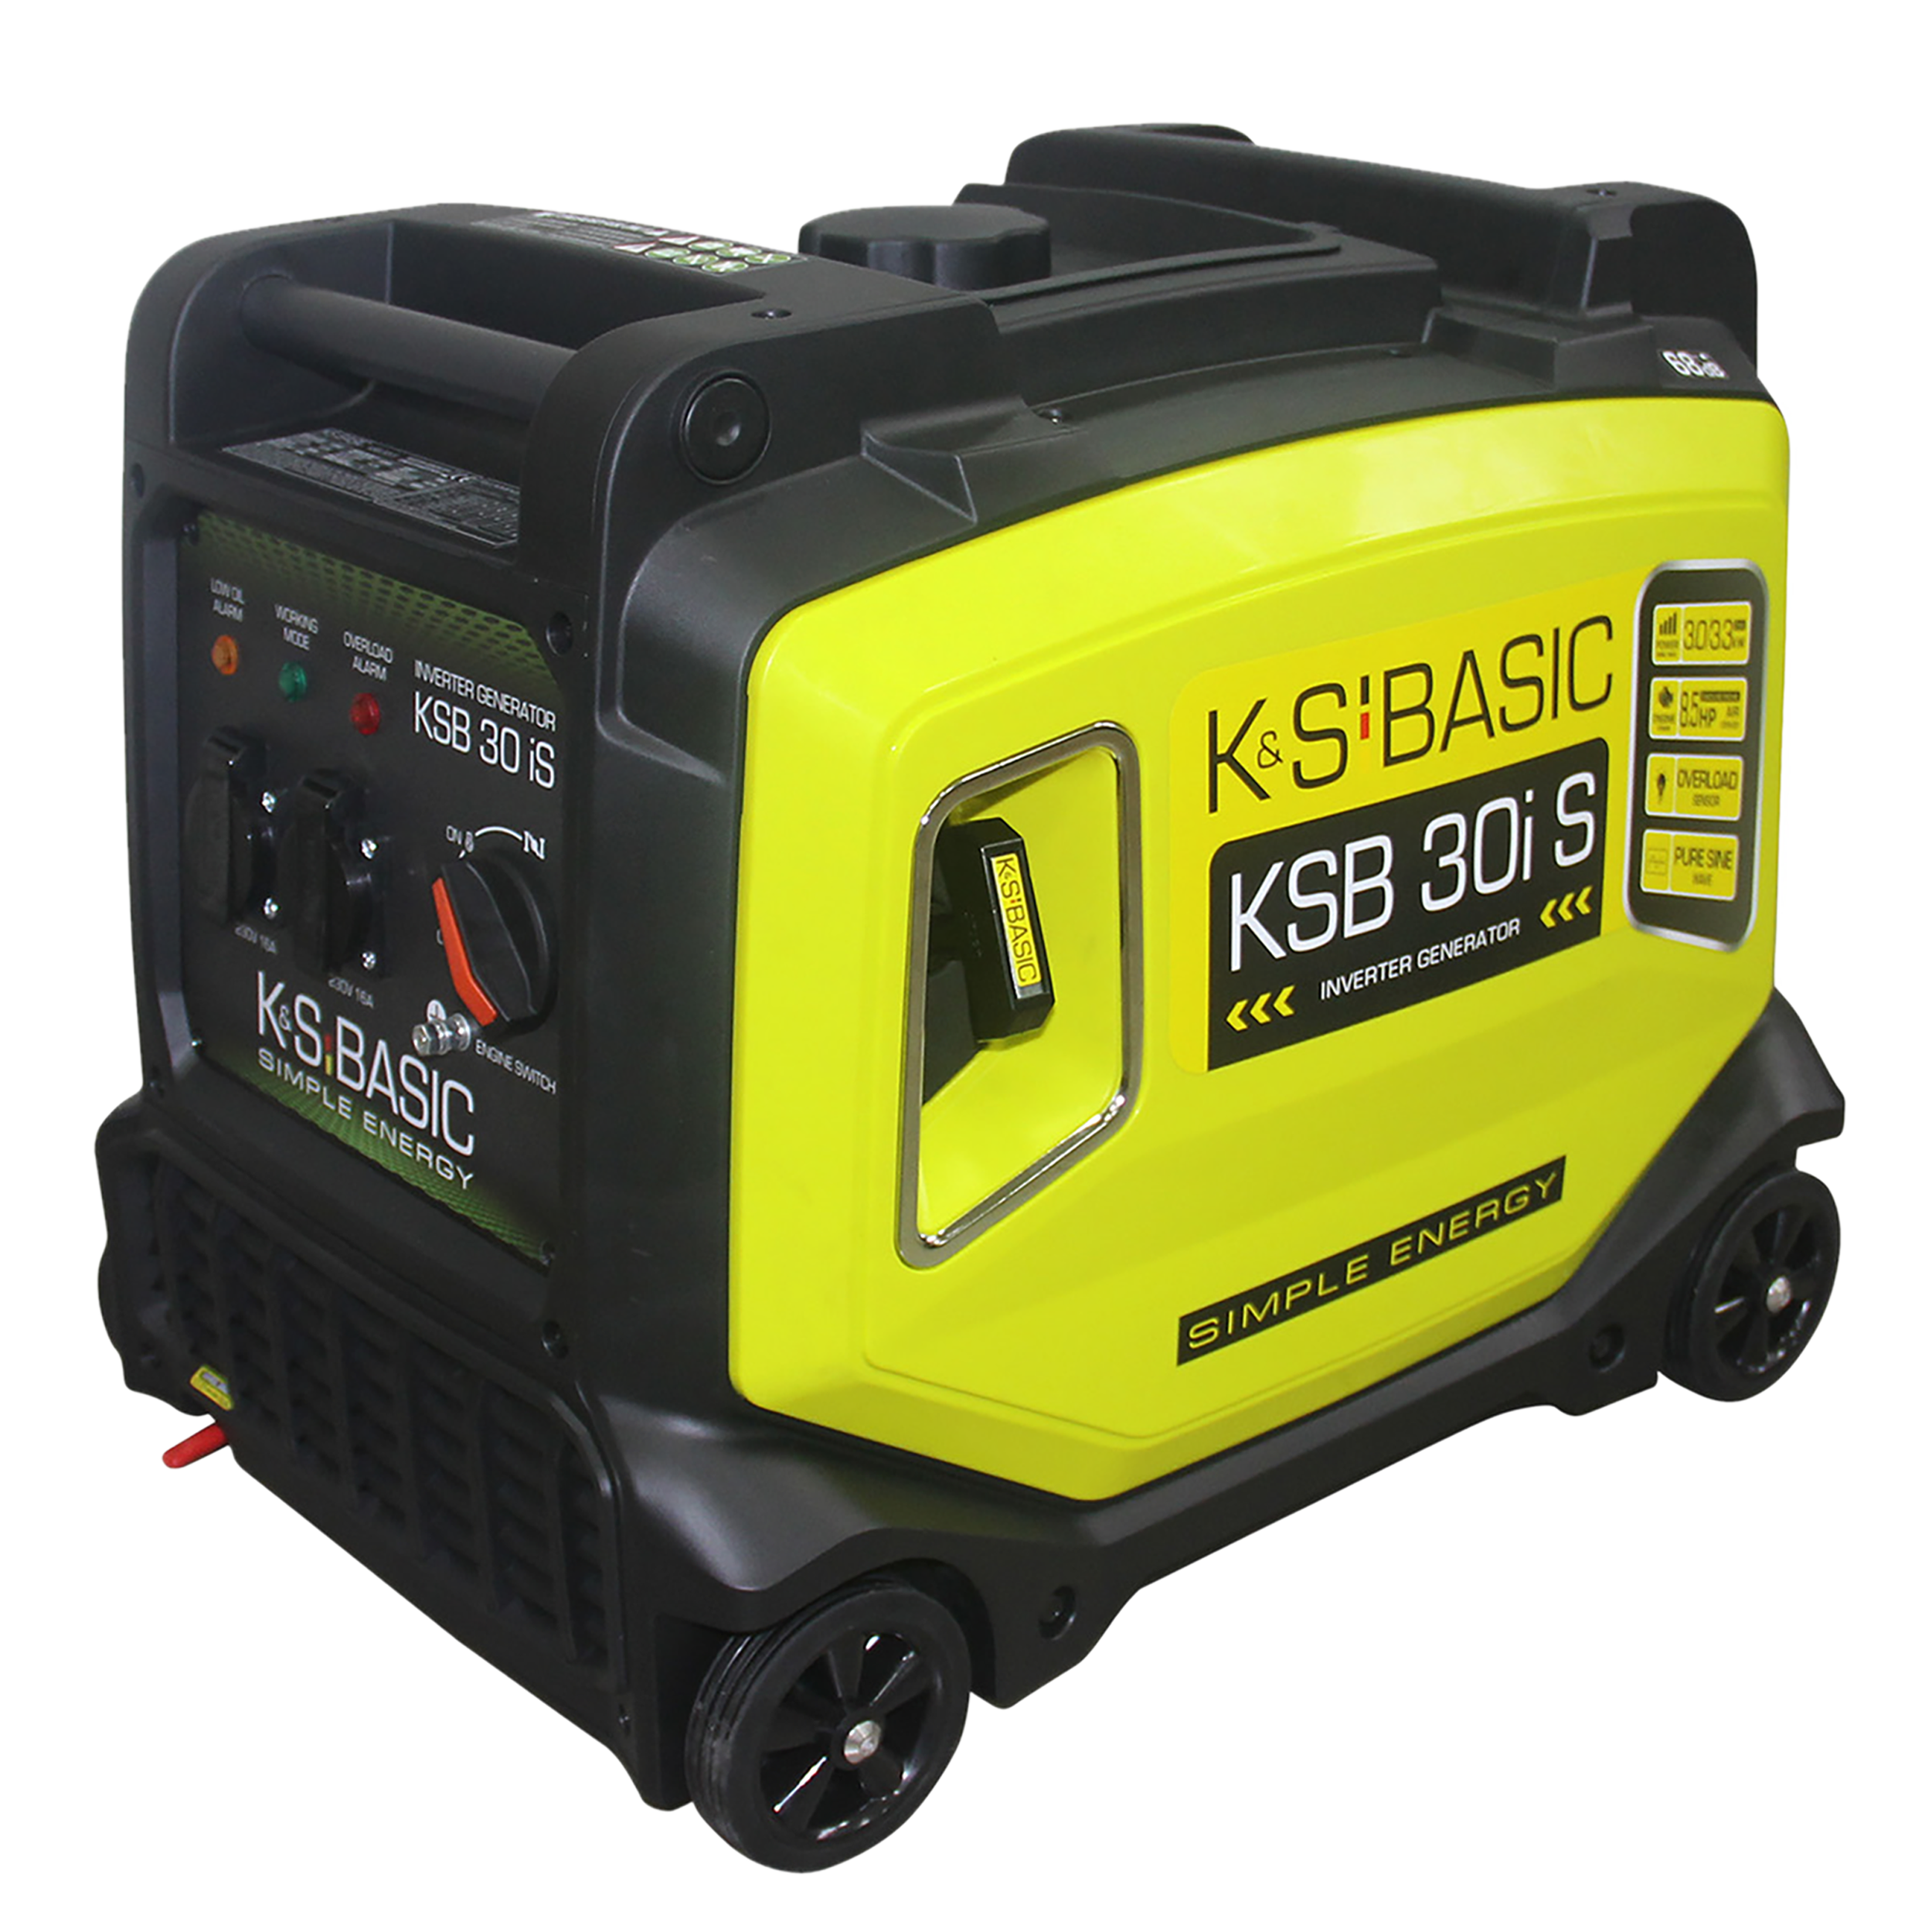 Generador inverter KSB 30i S